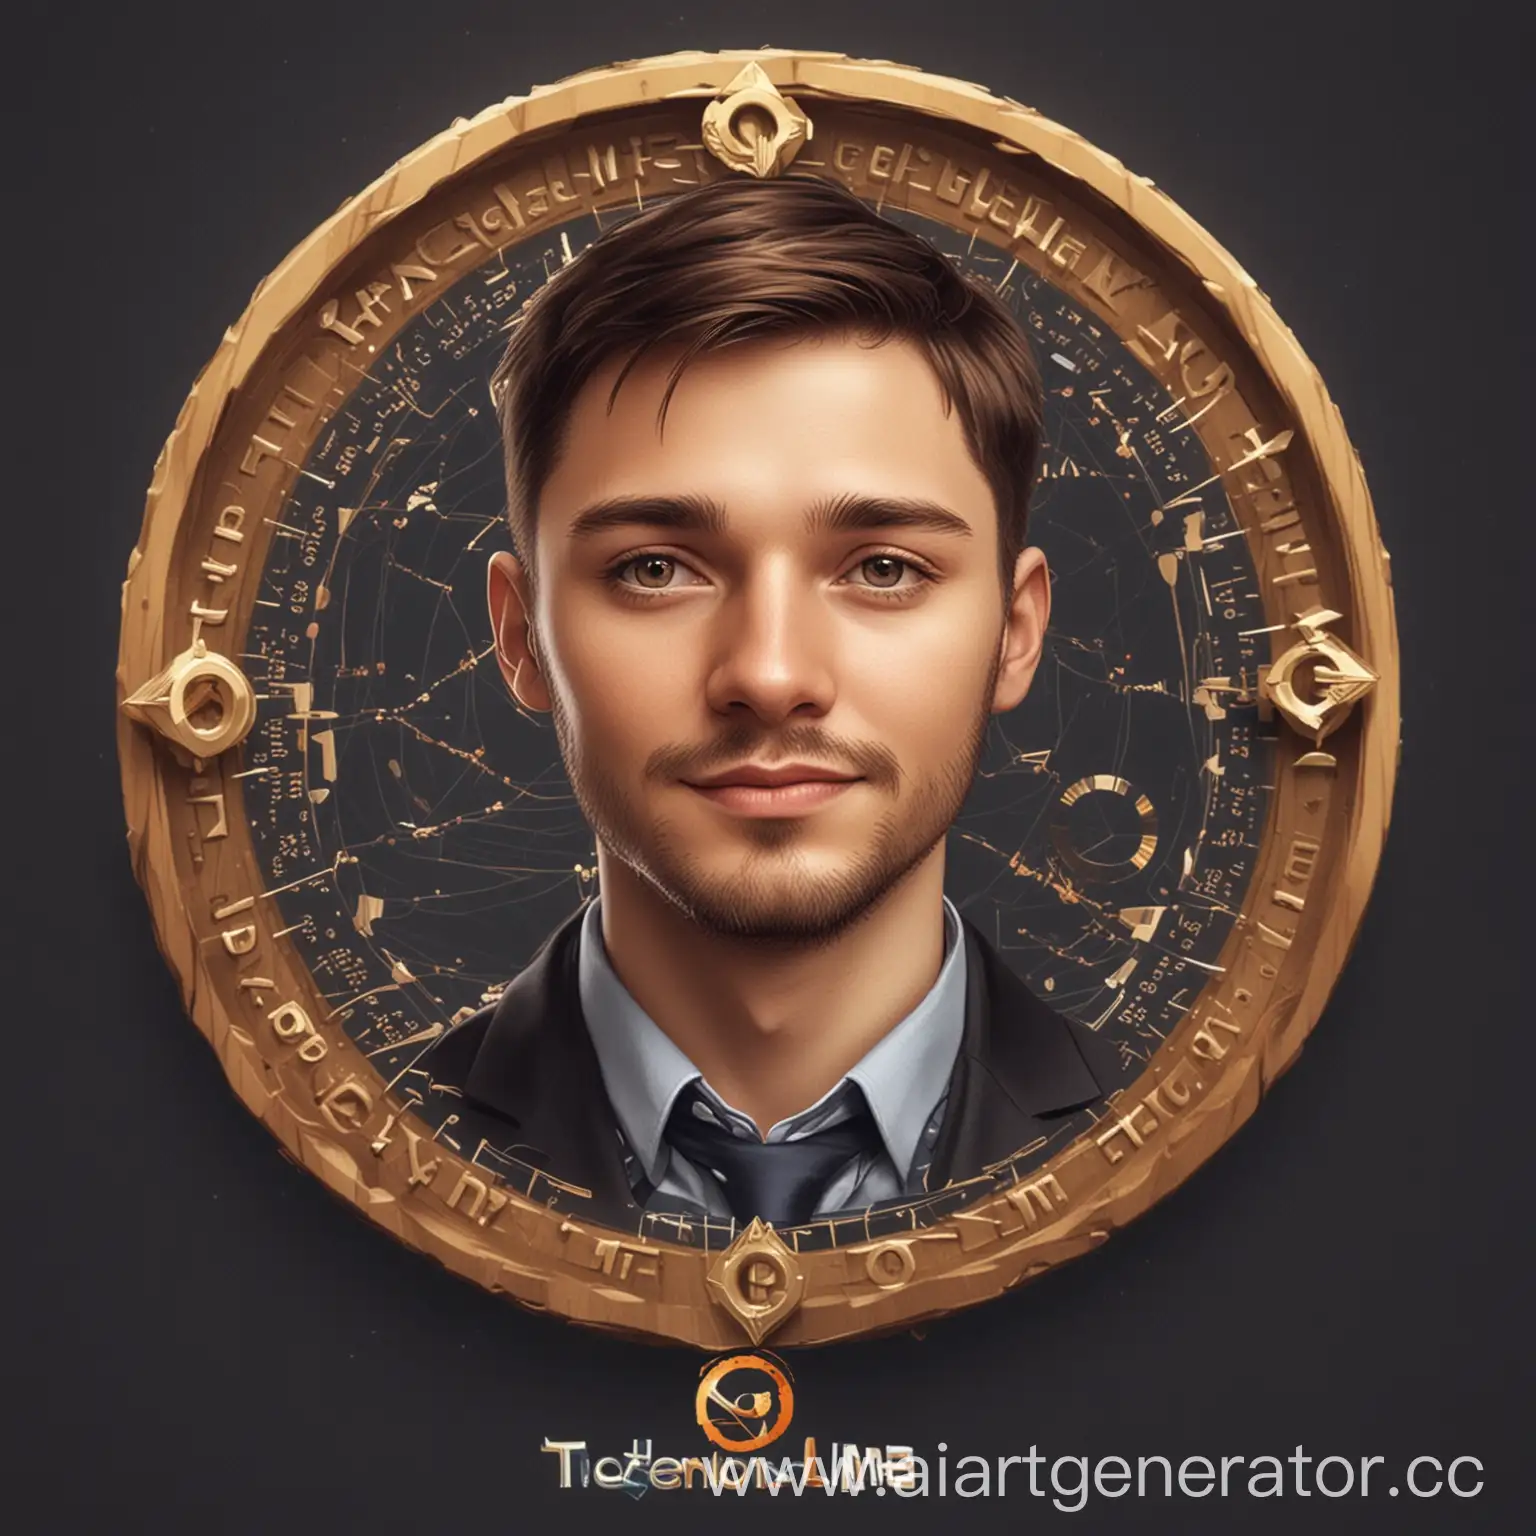 аватарка для телеграмм канала про криптовалюту с название "Token Time"
